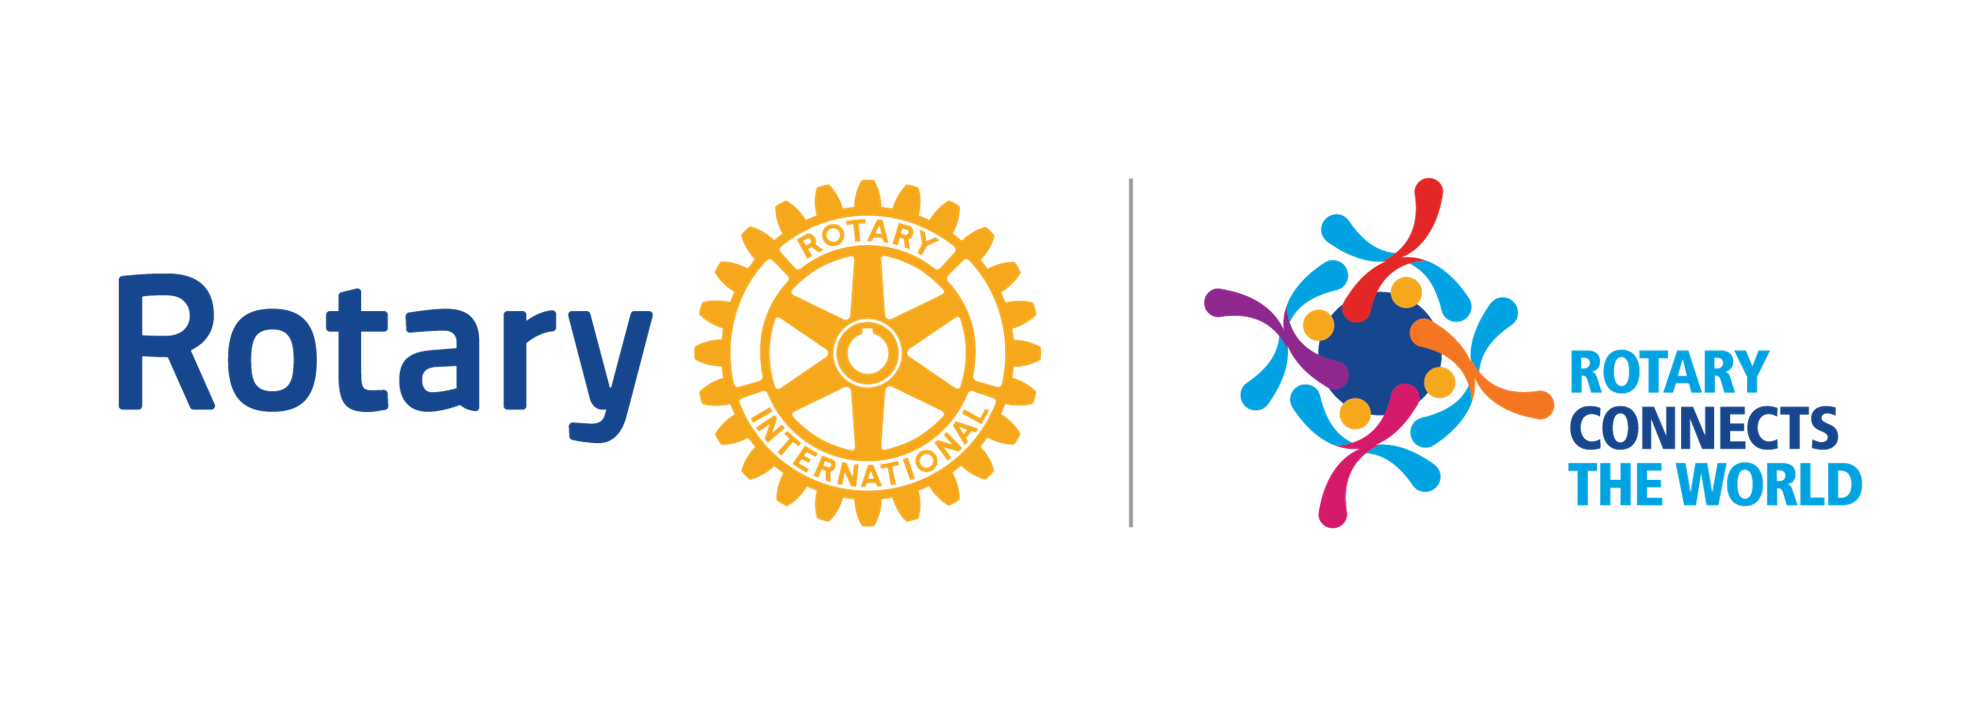 Rotary Logo   2019 20 Theme 